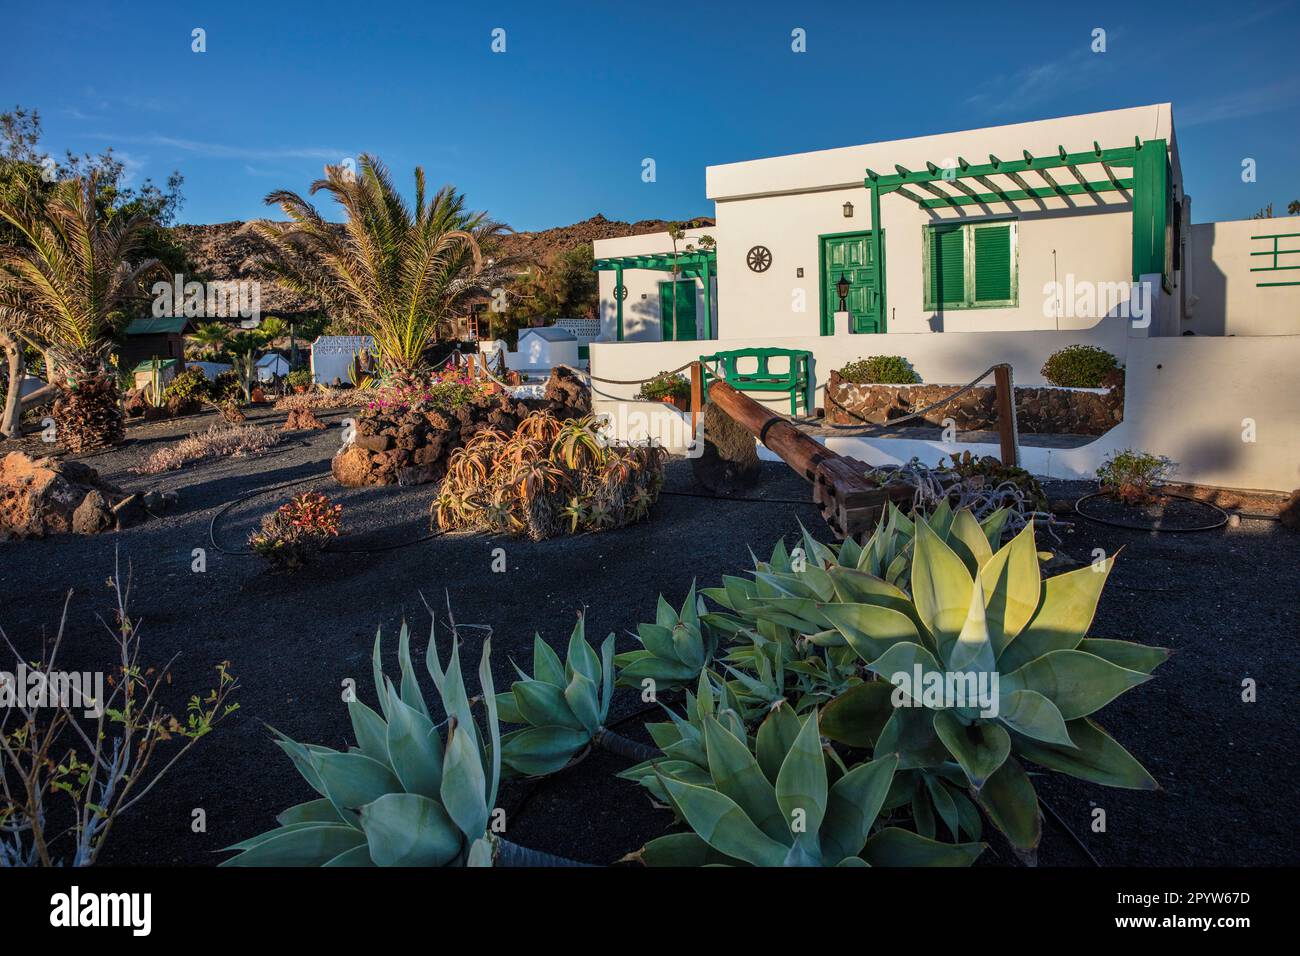 Spagna, Isole Canarie, Lanzarote, Charco del Palo. Casa residenziale con giardino. Pianta succulenta, cactus, cactus. Foto Stock